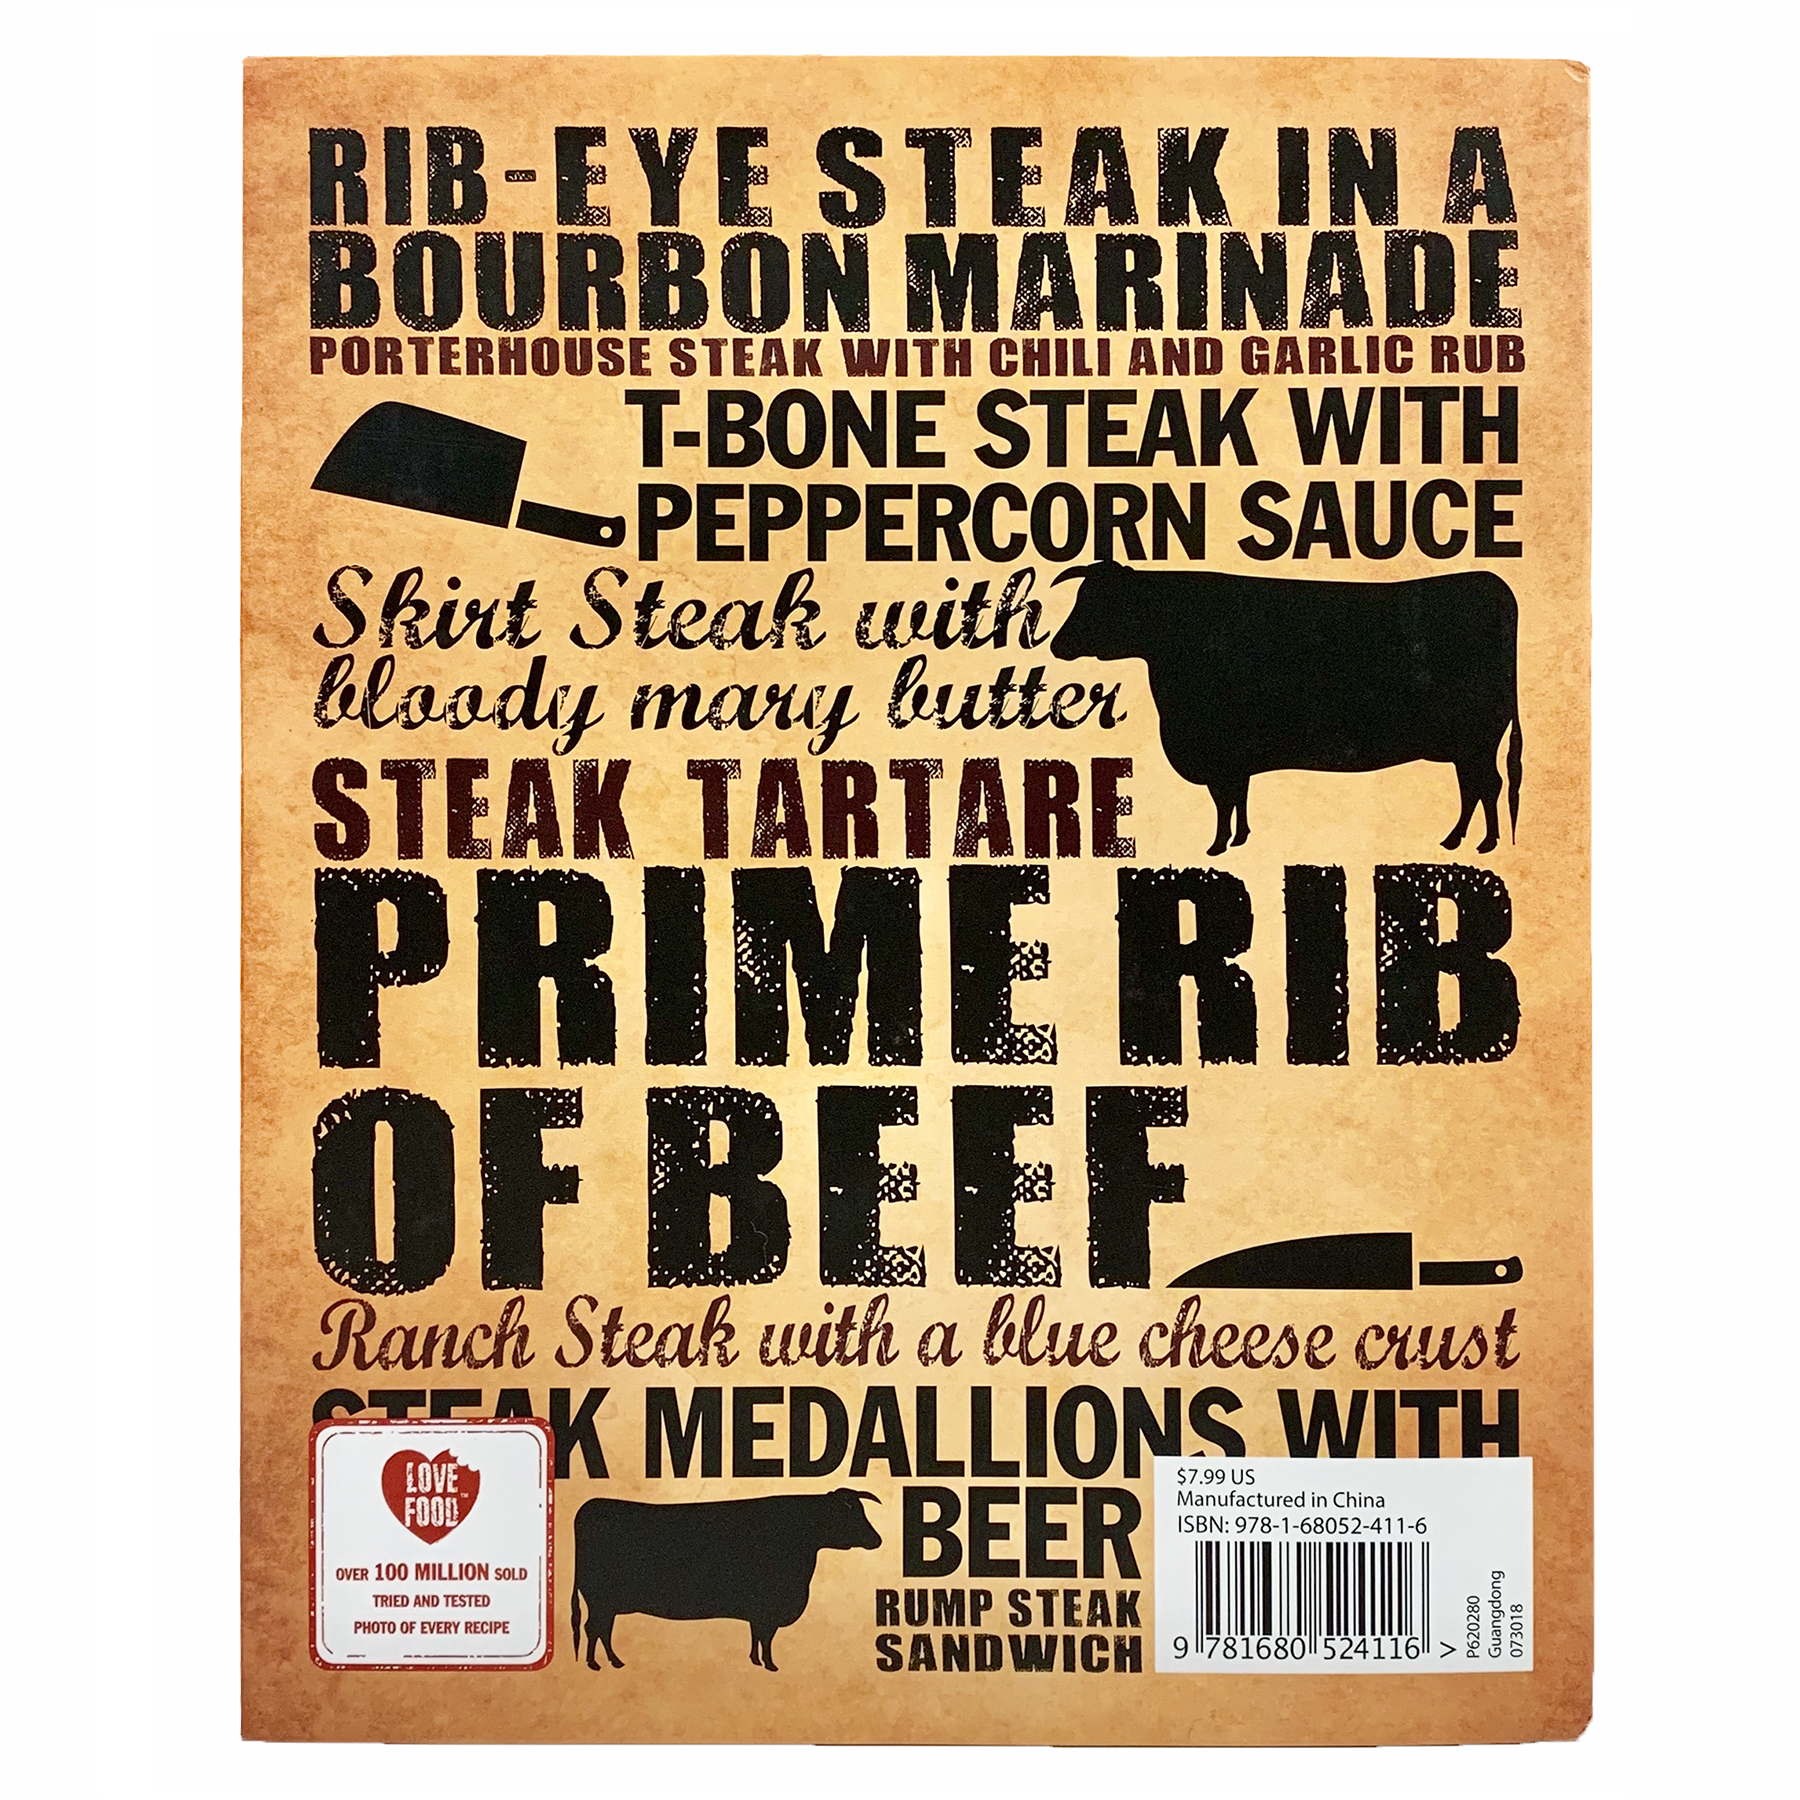 The Book of Steak